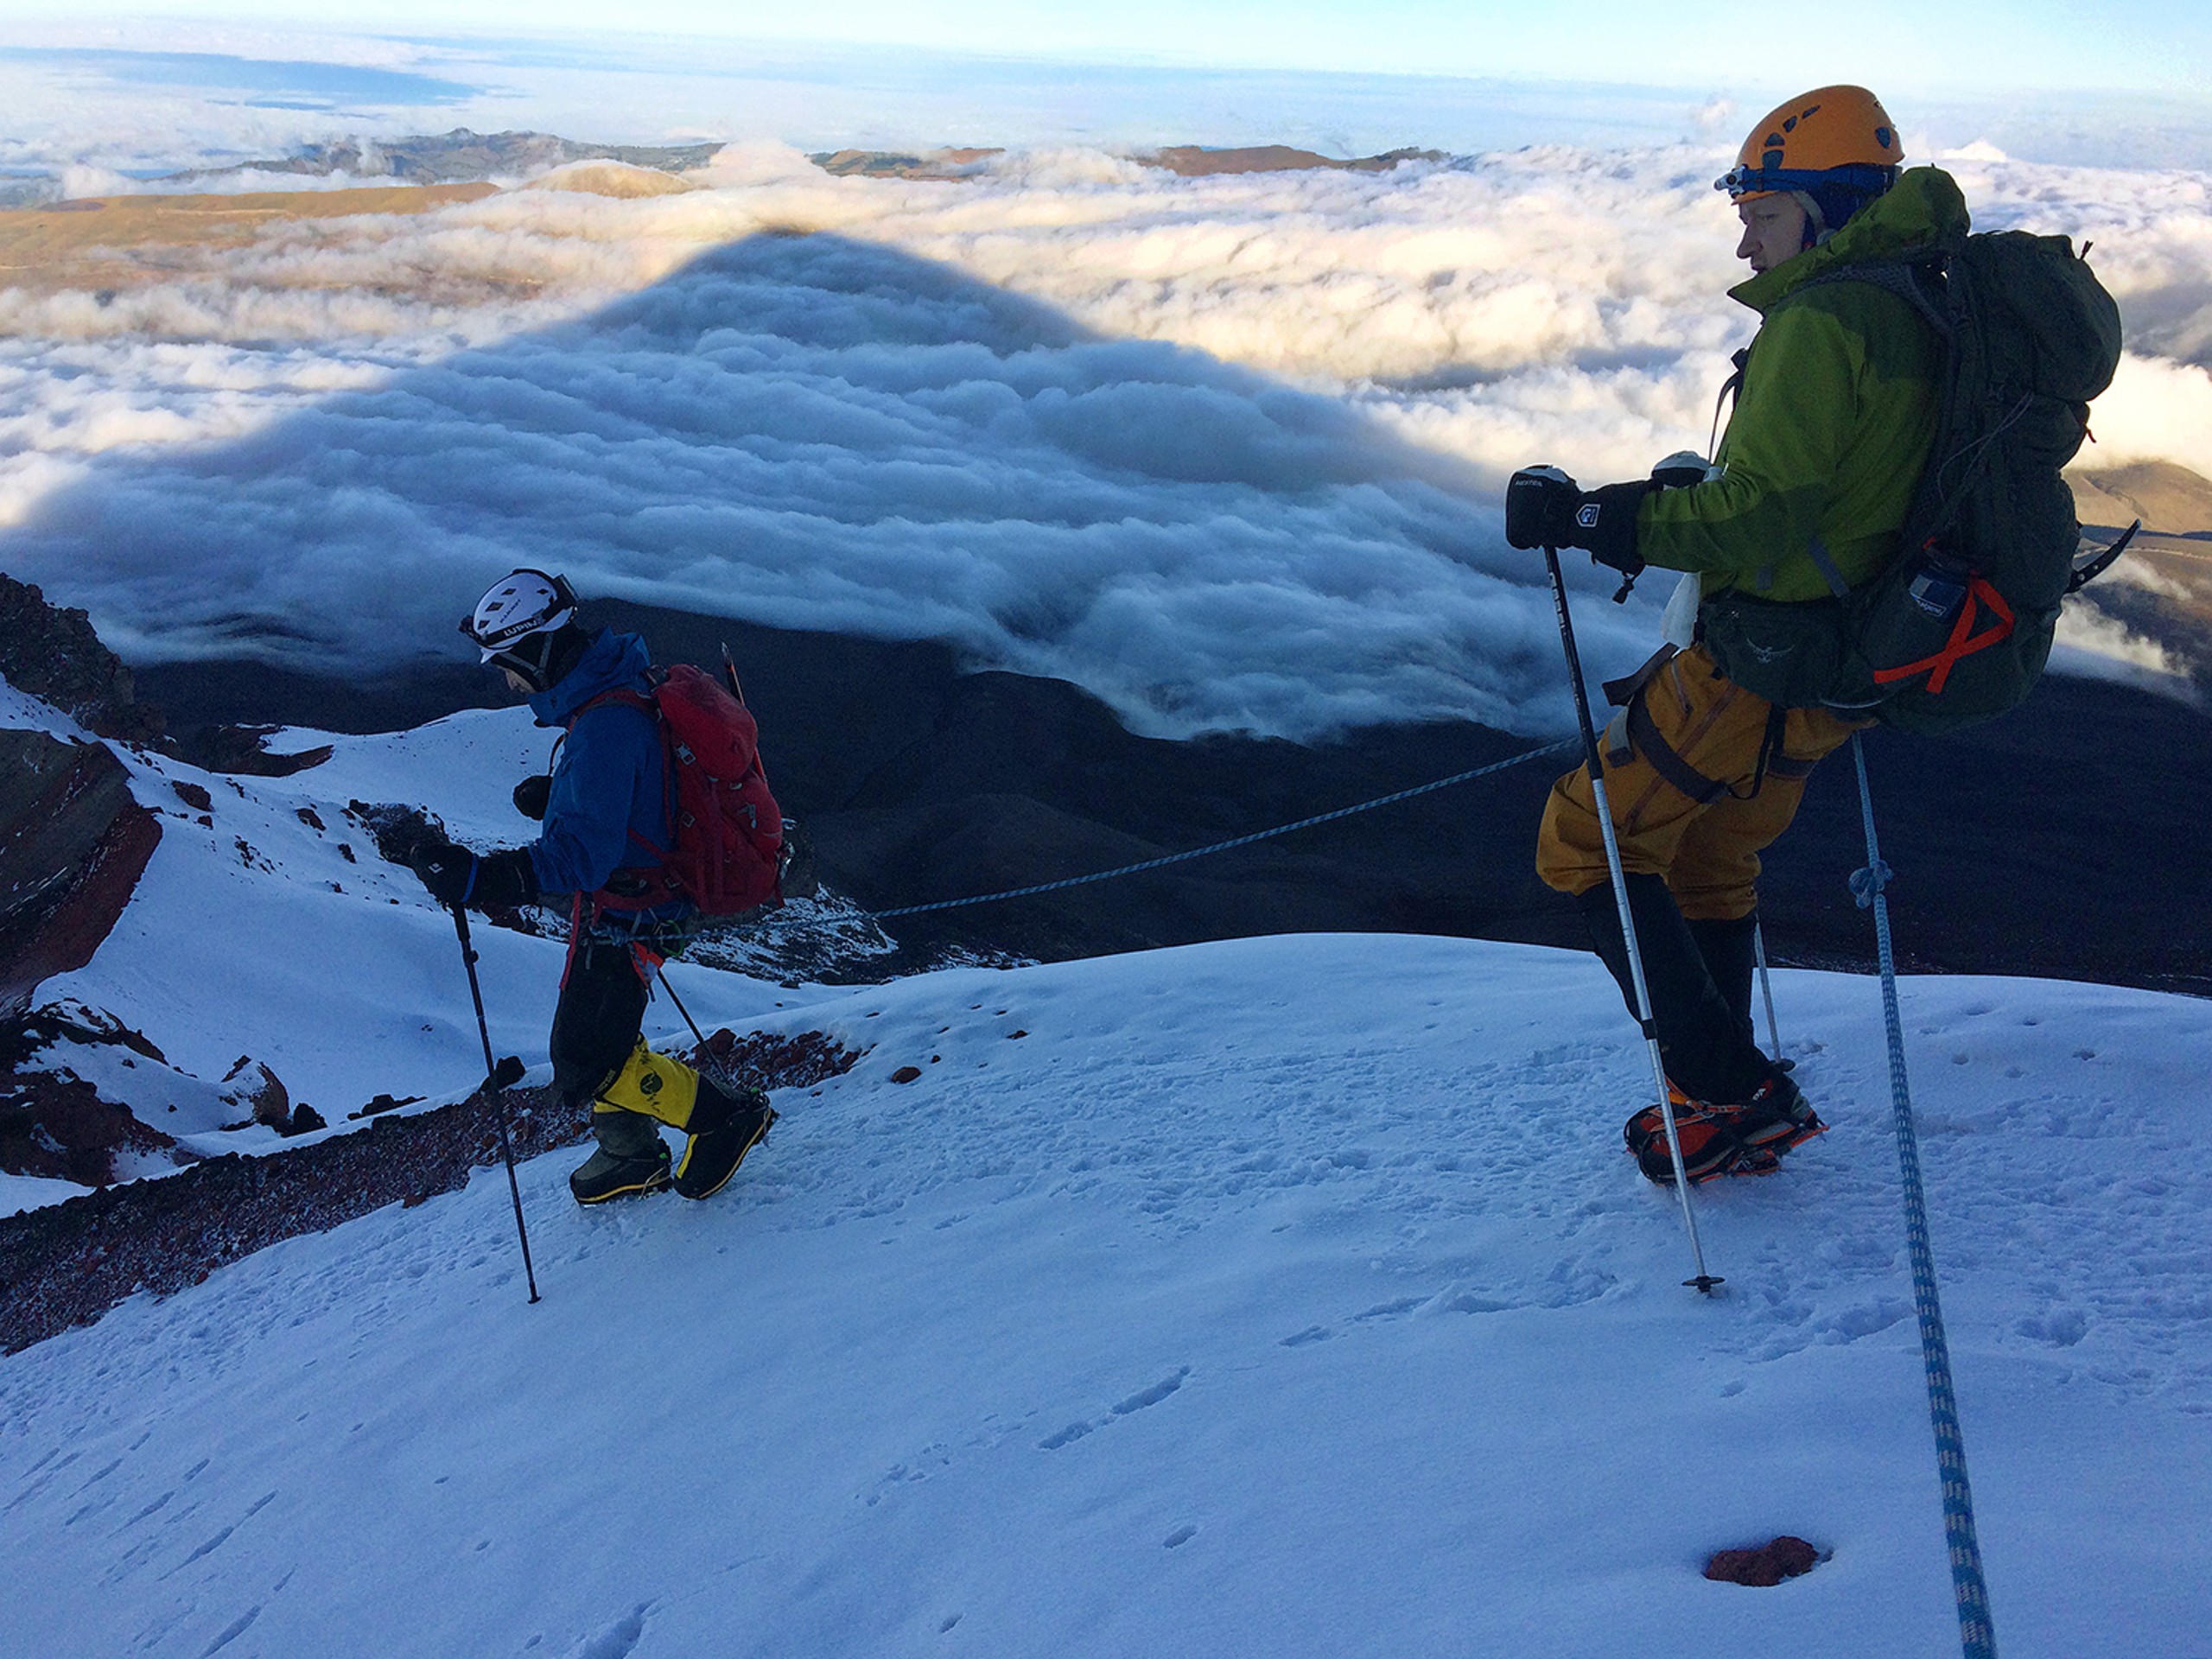 Two climbers descending Chimborazo